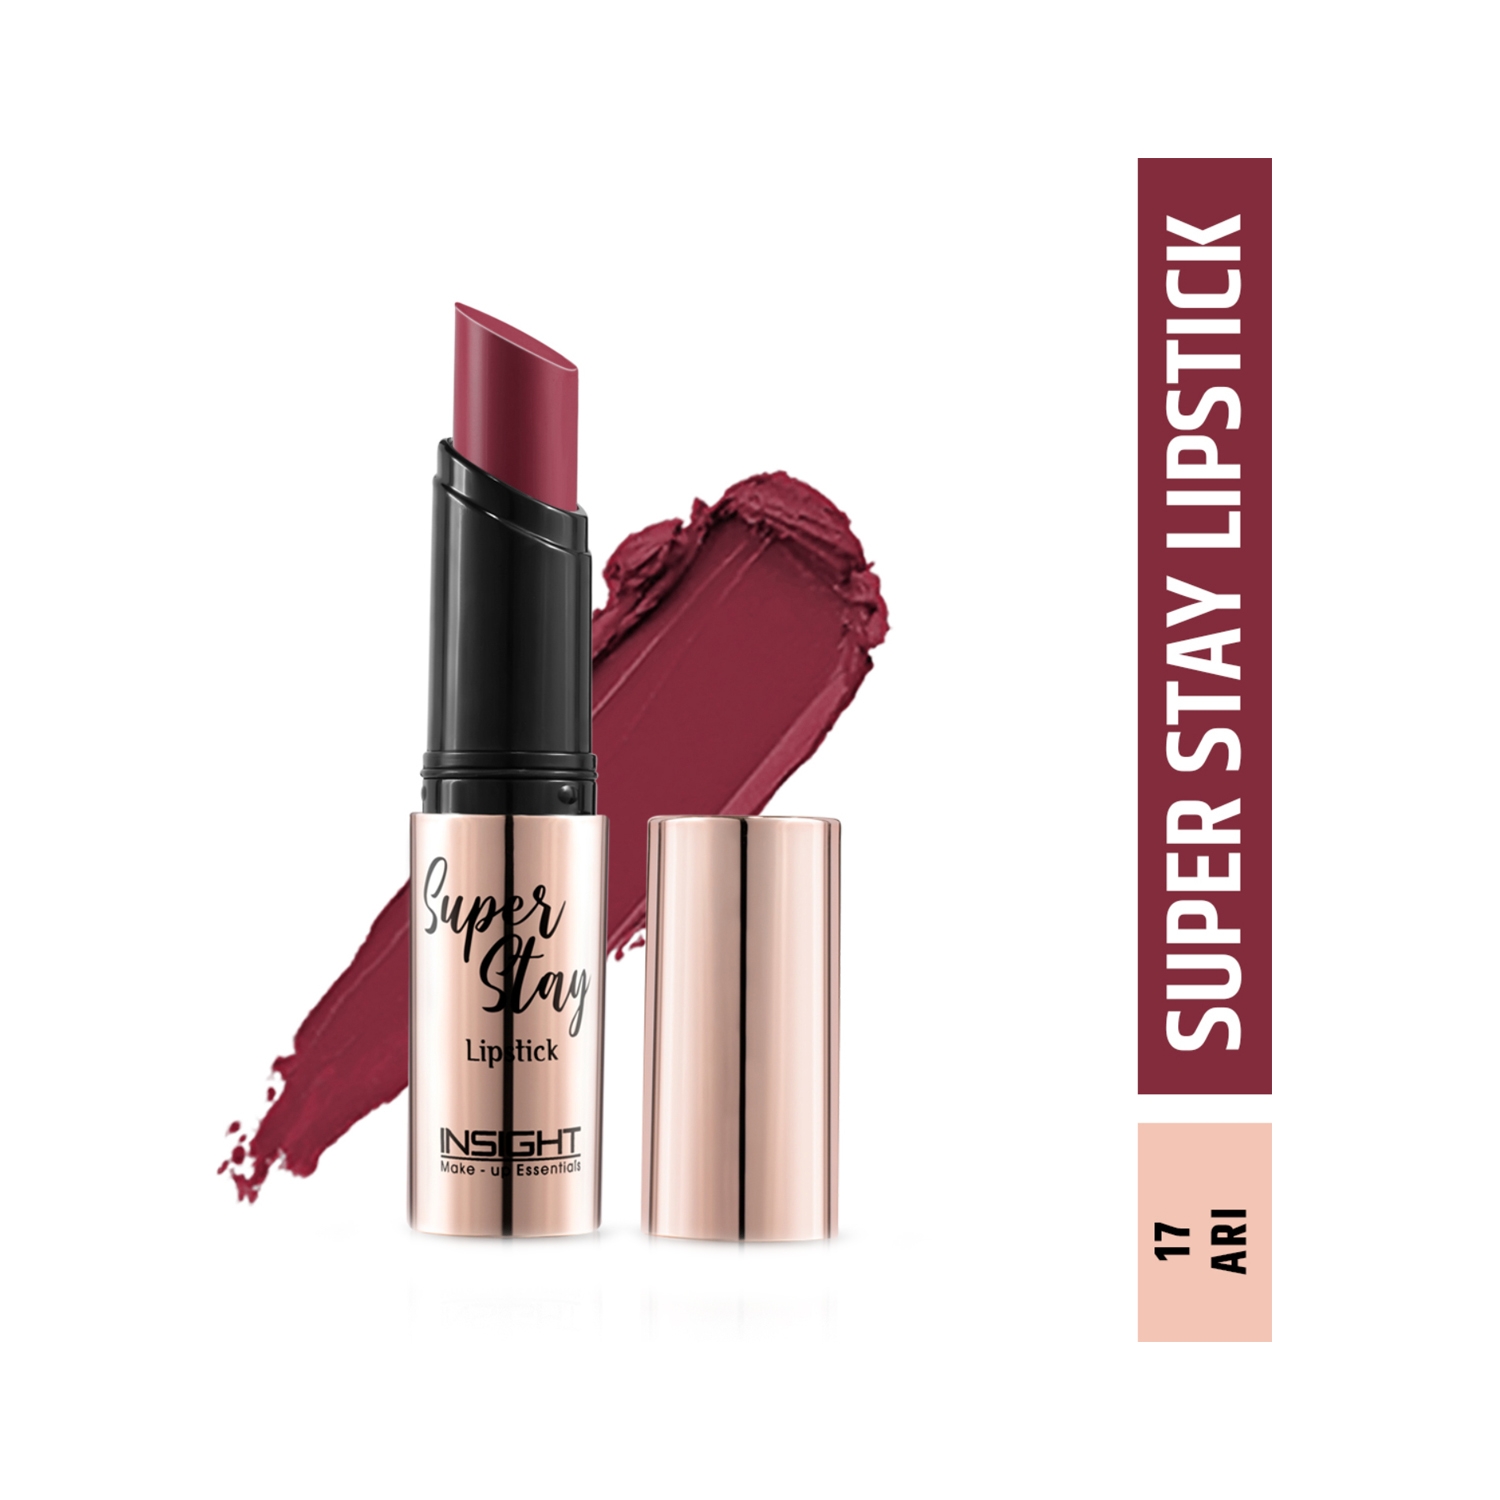 Insight Cosmetics Super Stay Lipstick - 17 Ari (7g)